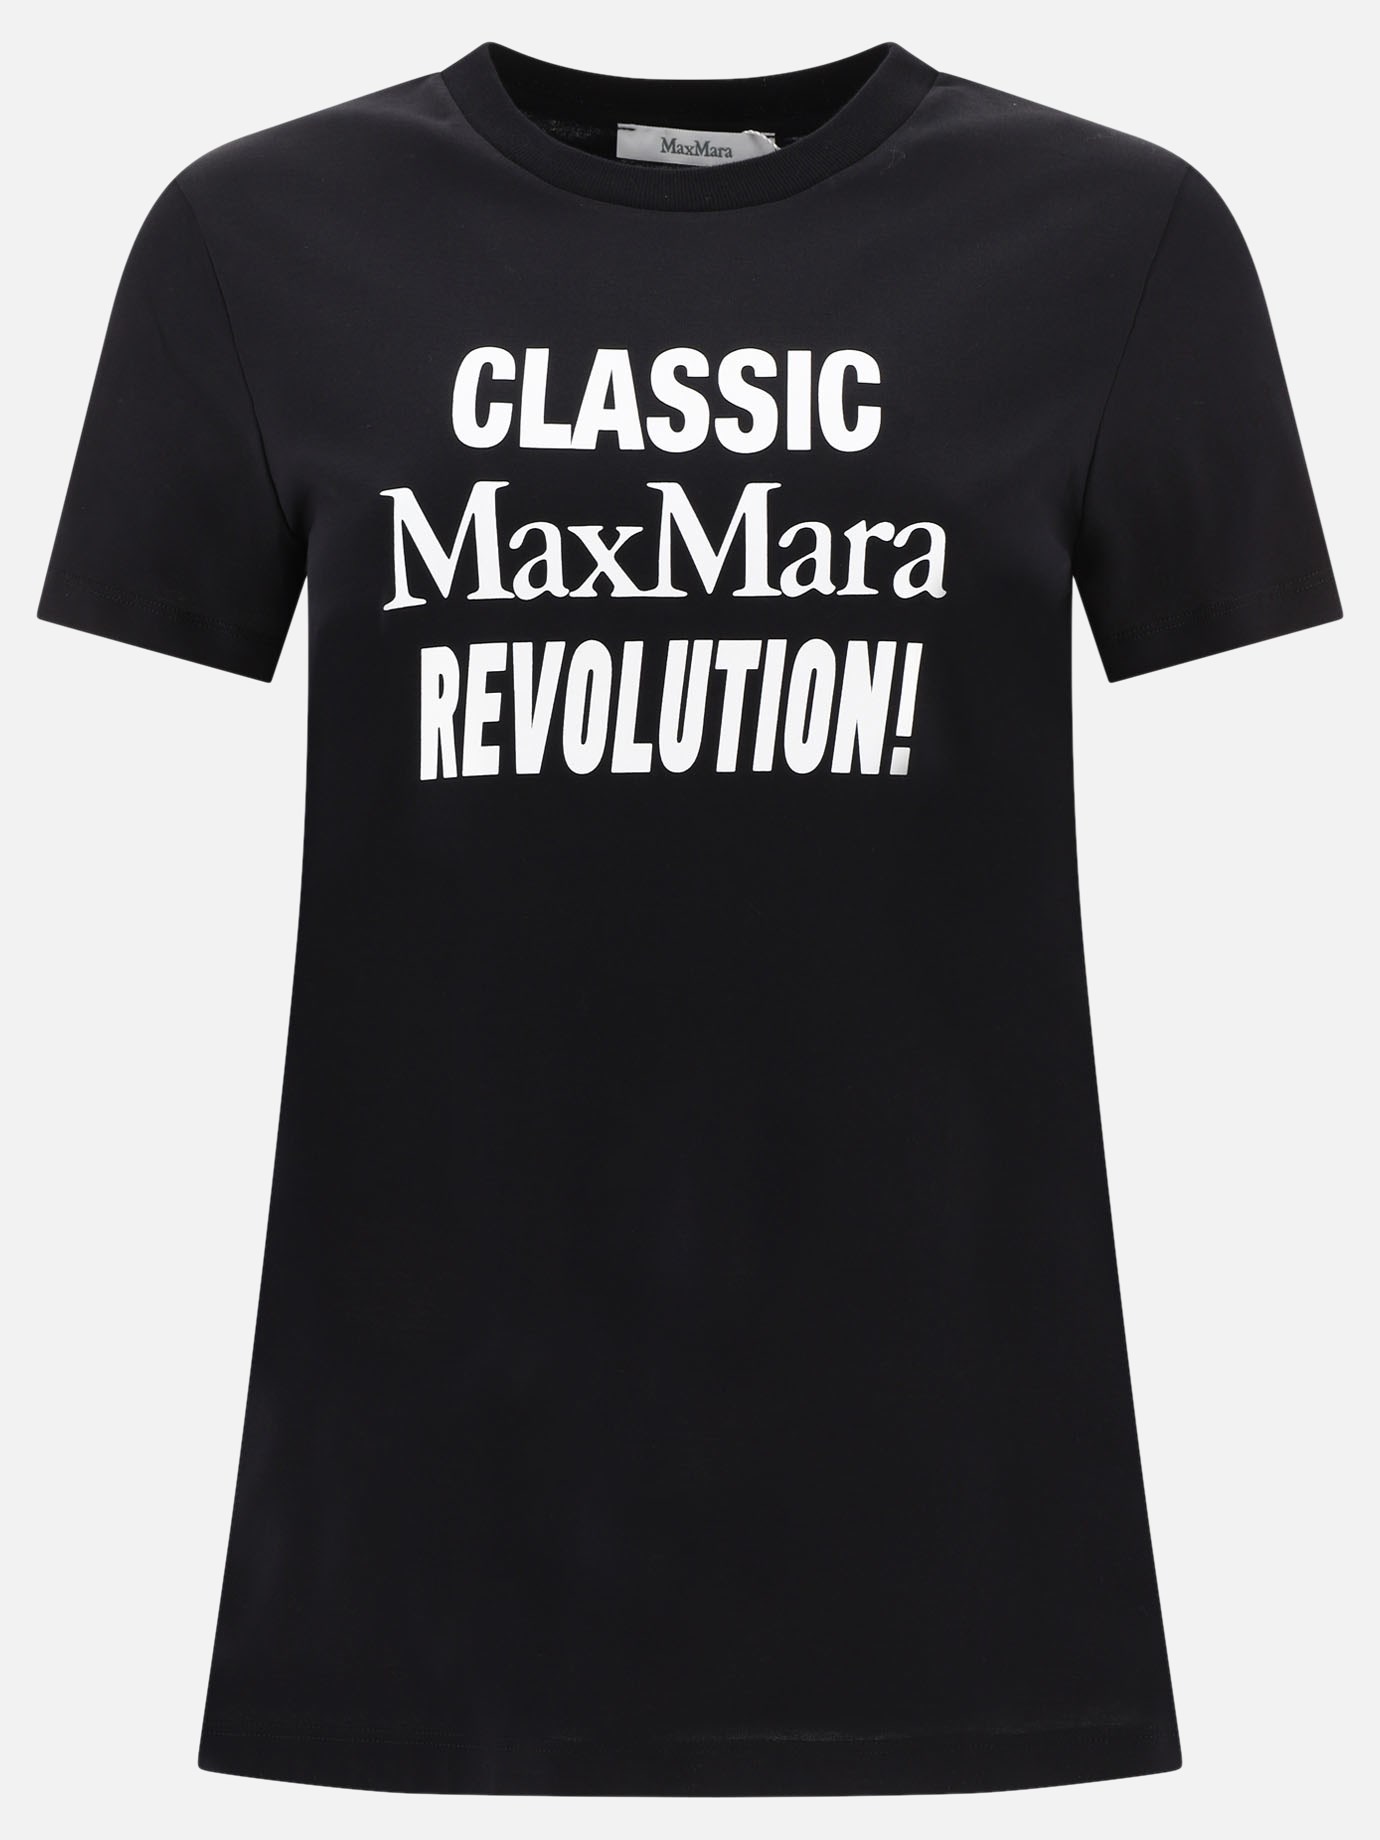  Gerard  t-shirtby Max Mara - 2